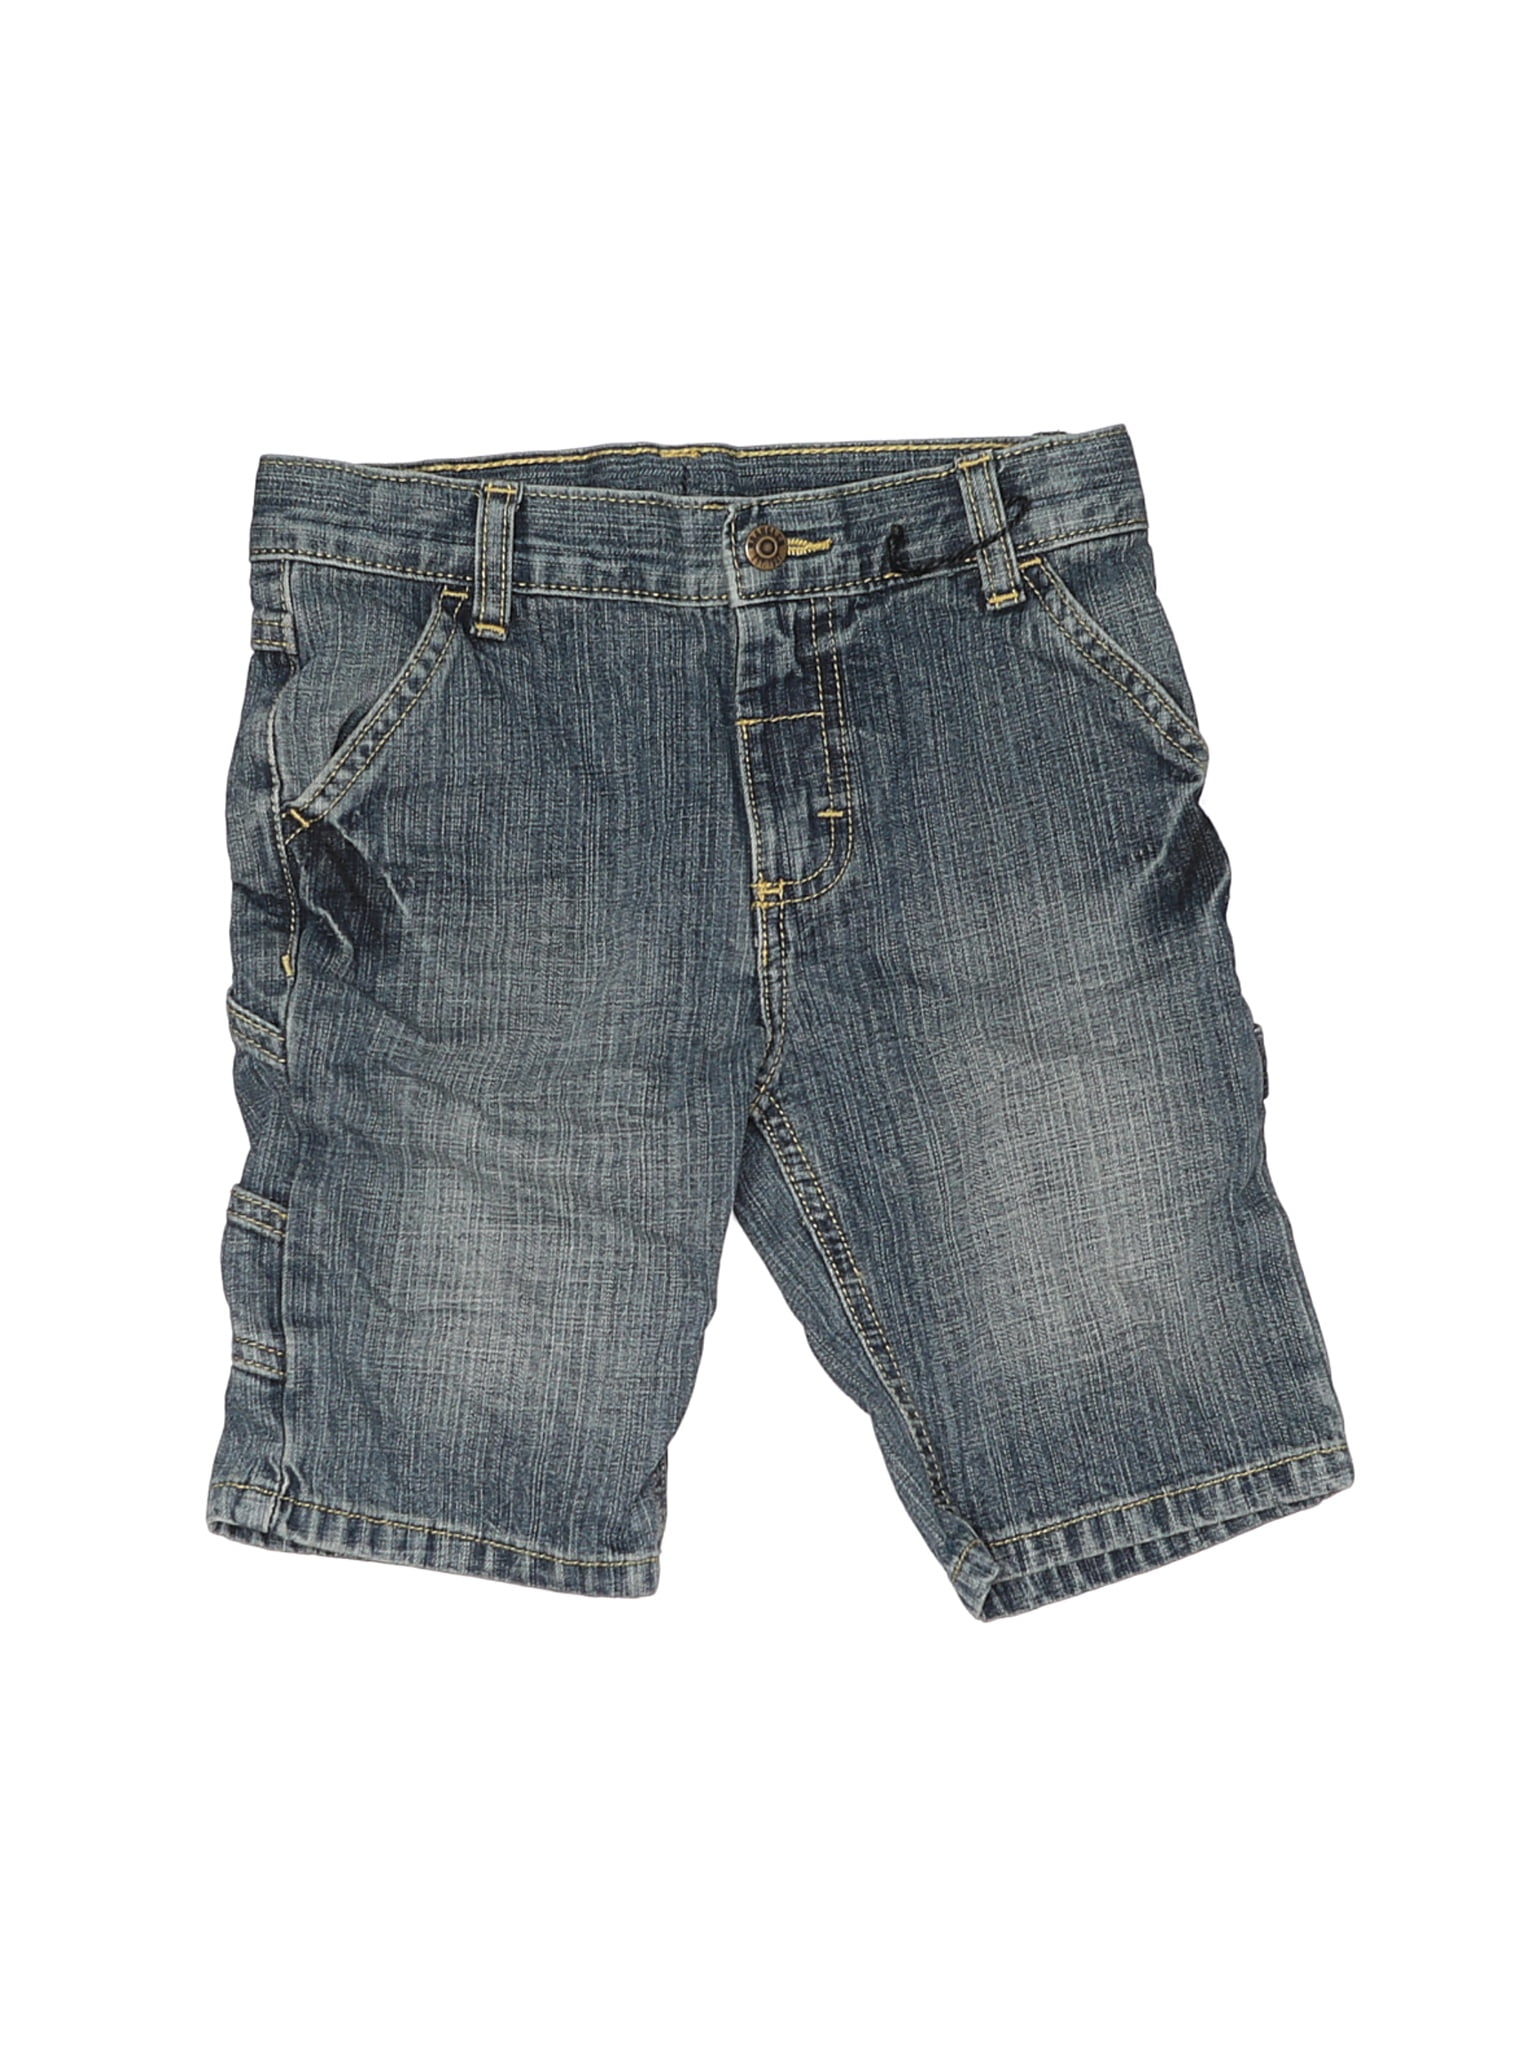 walmart wrangler jean shorts